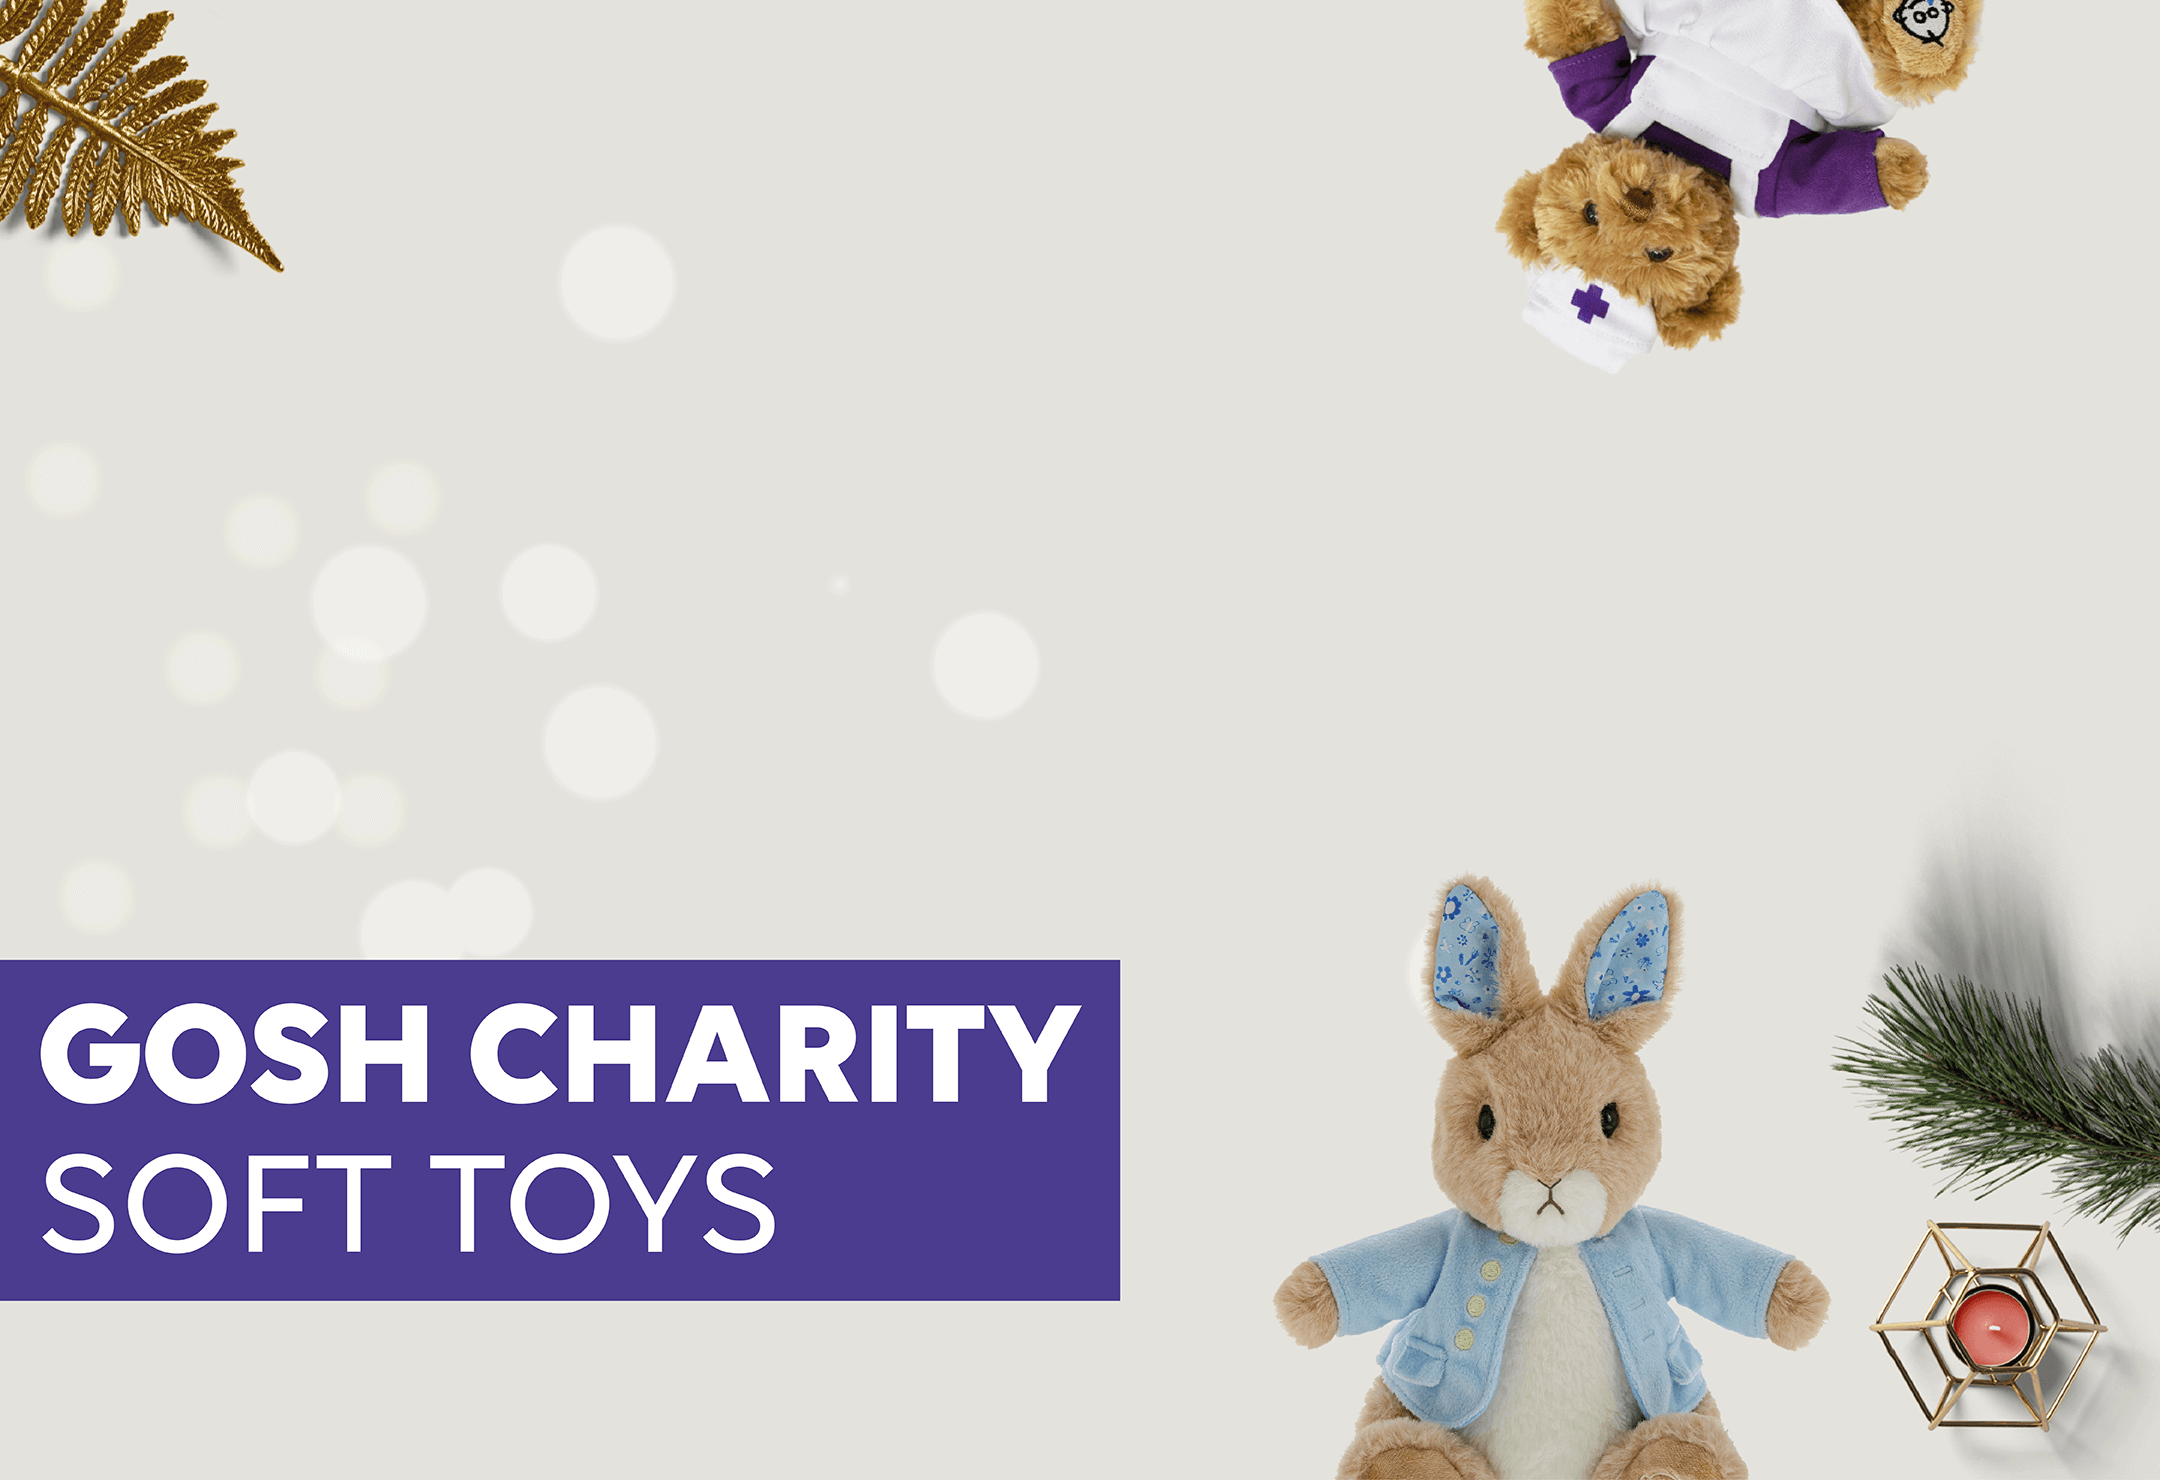 Gosh_charity_soft_toys_on_christmas_background